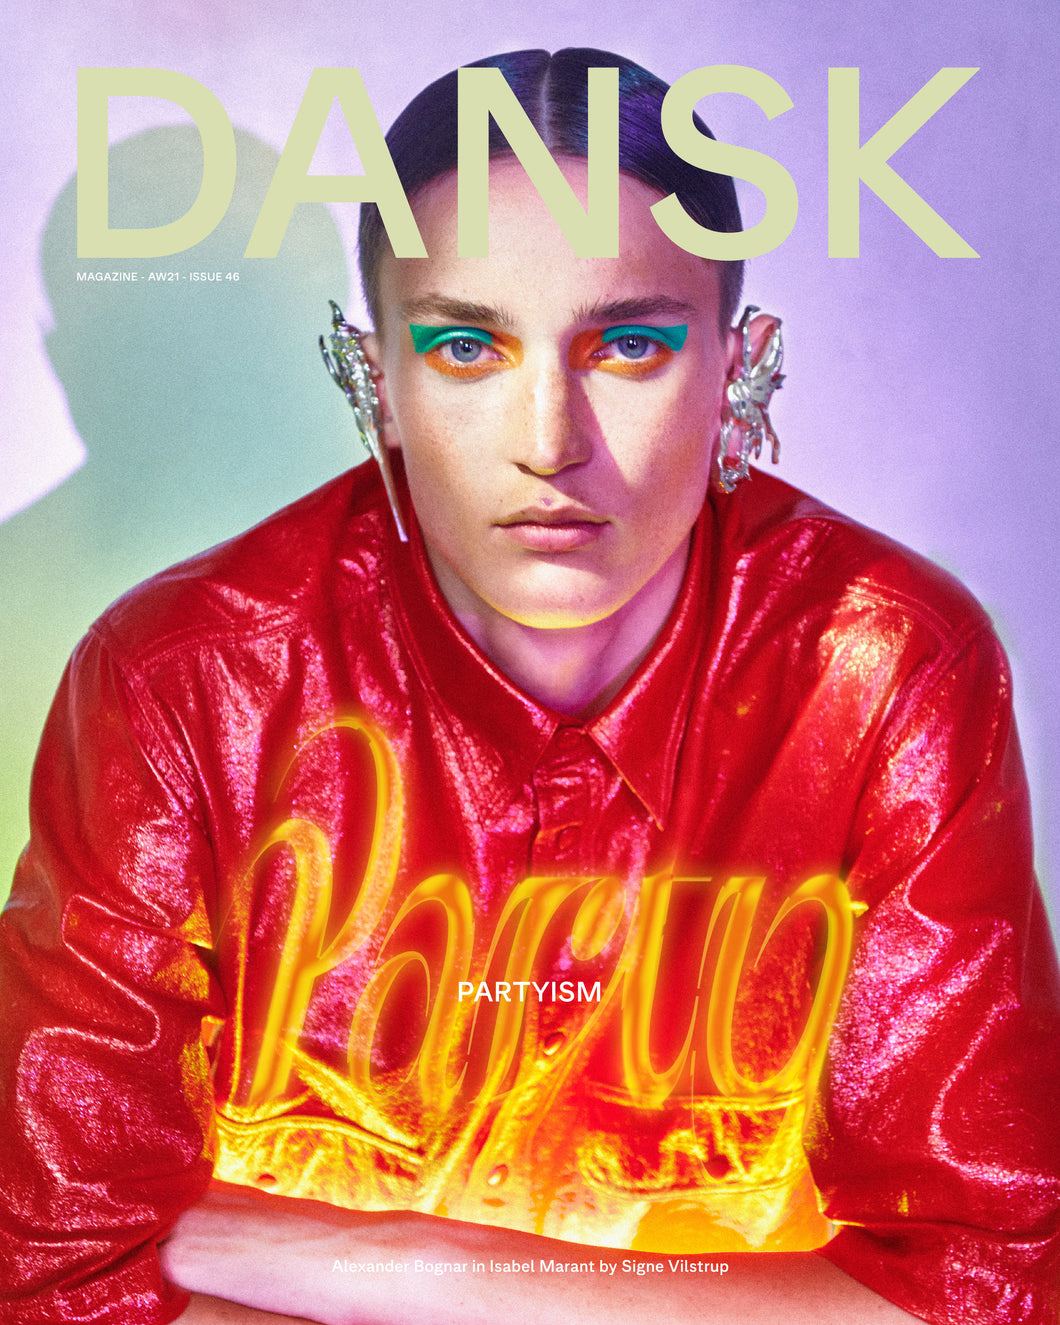 DANSK Magazine AW21